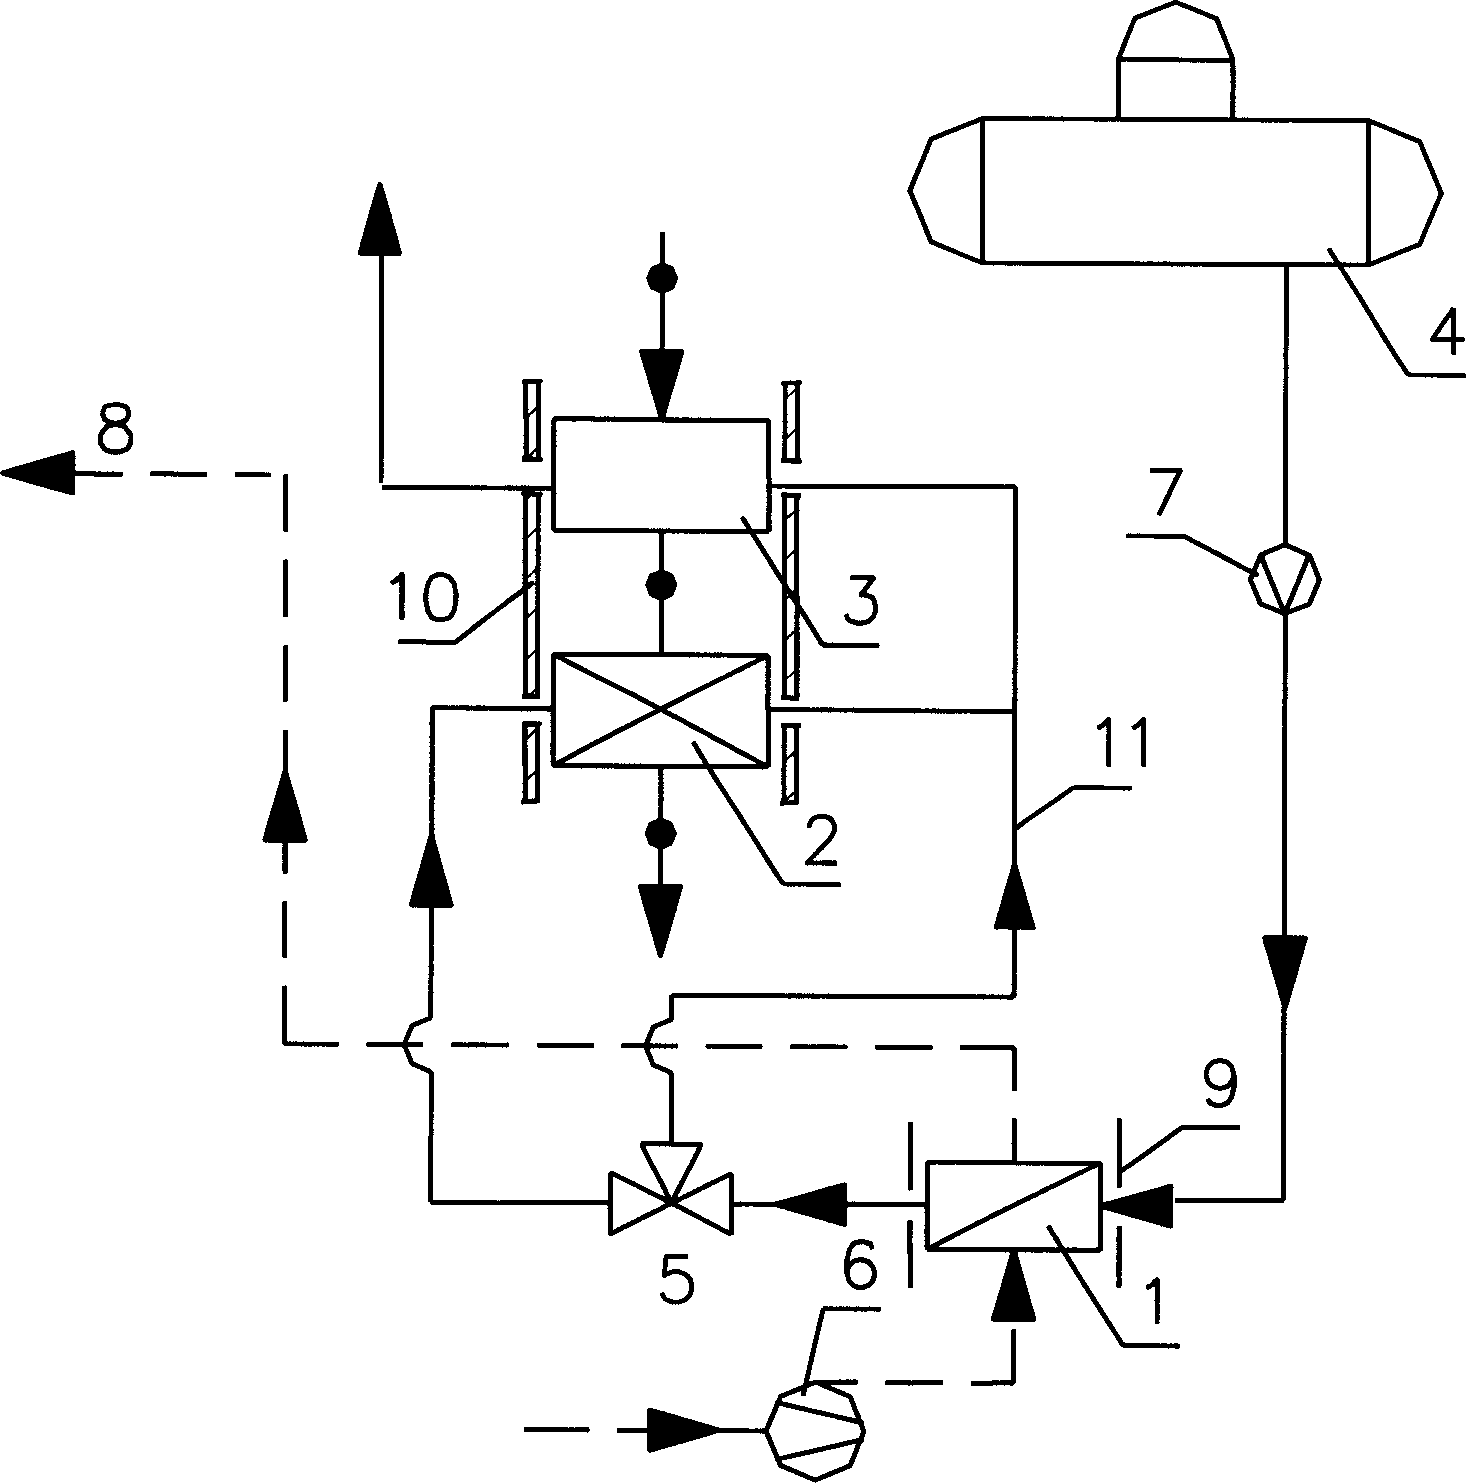 Method of avoiding low temperature corrosion of boiler air preheater